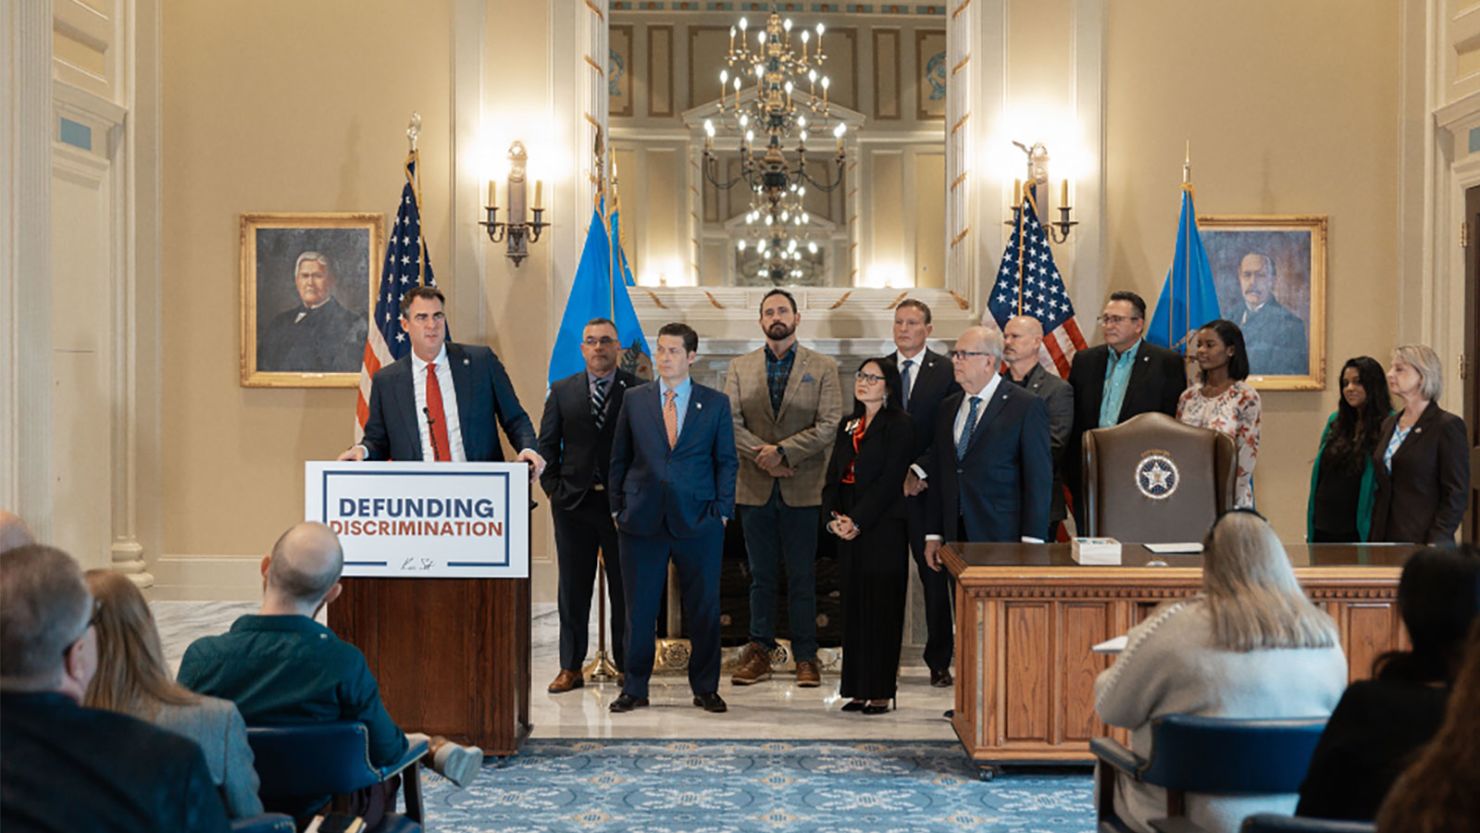 Oklahoma Gov. Kevin Stitt announces an executive order defunding DEI efforts in public colleges.